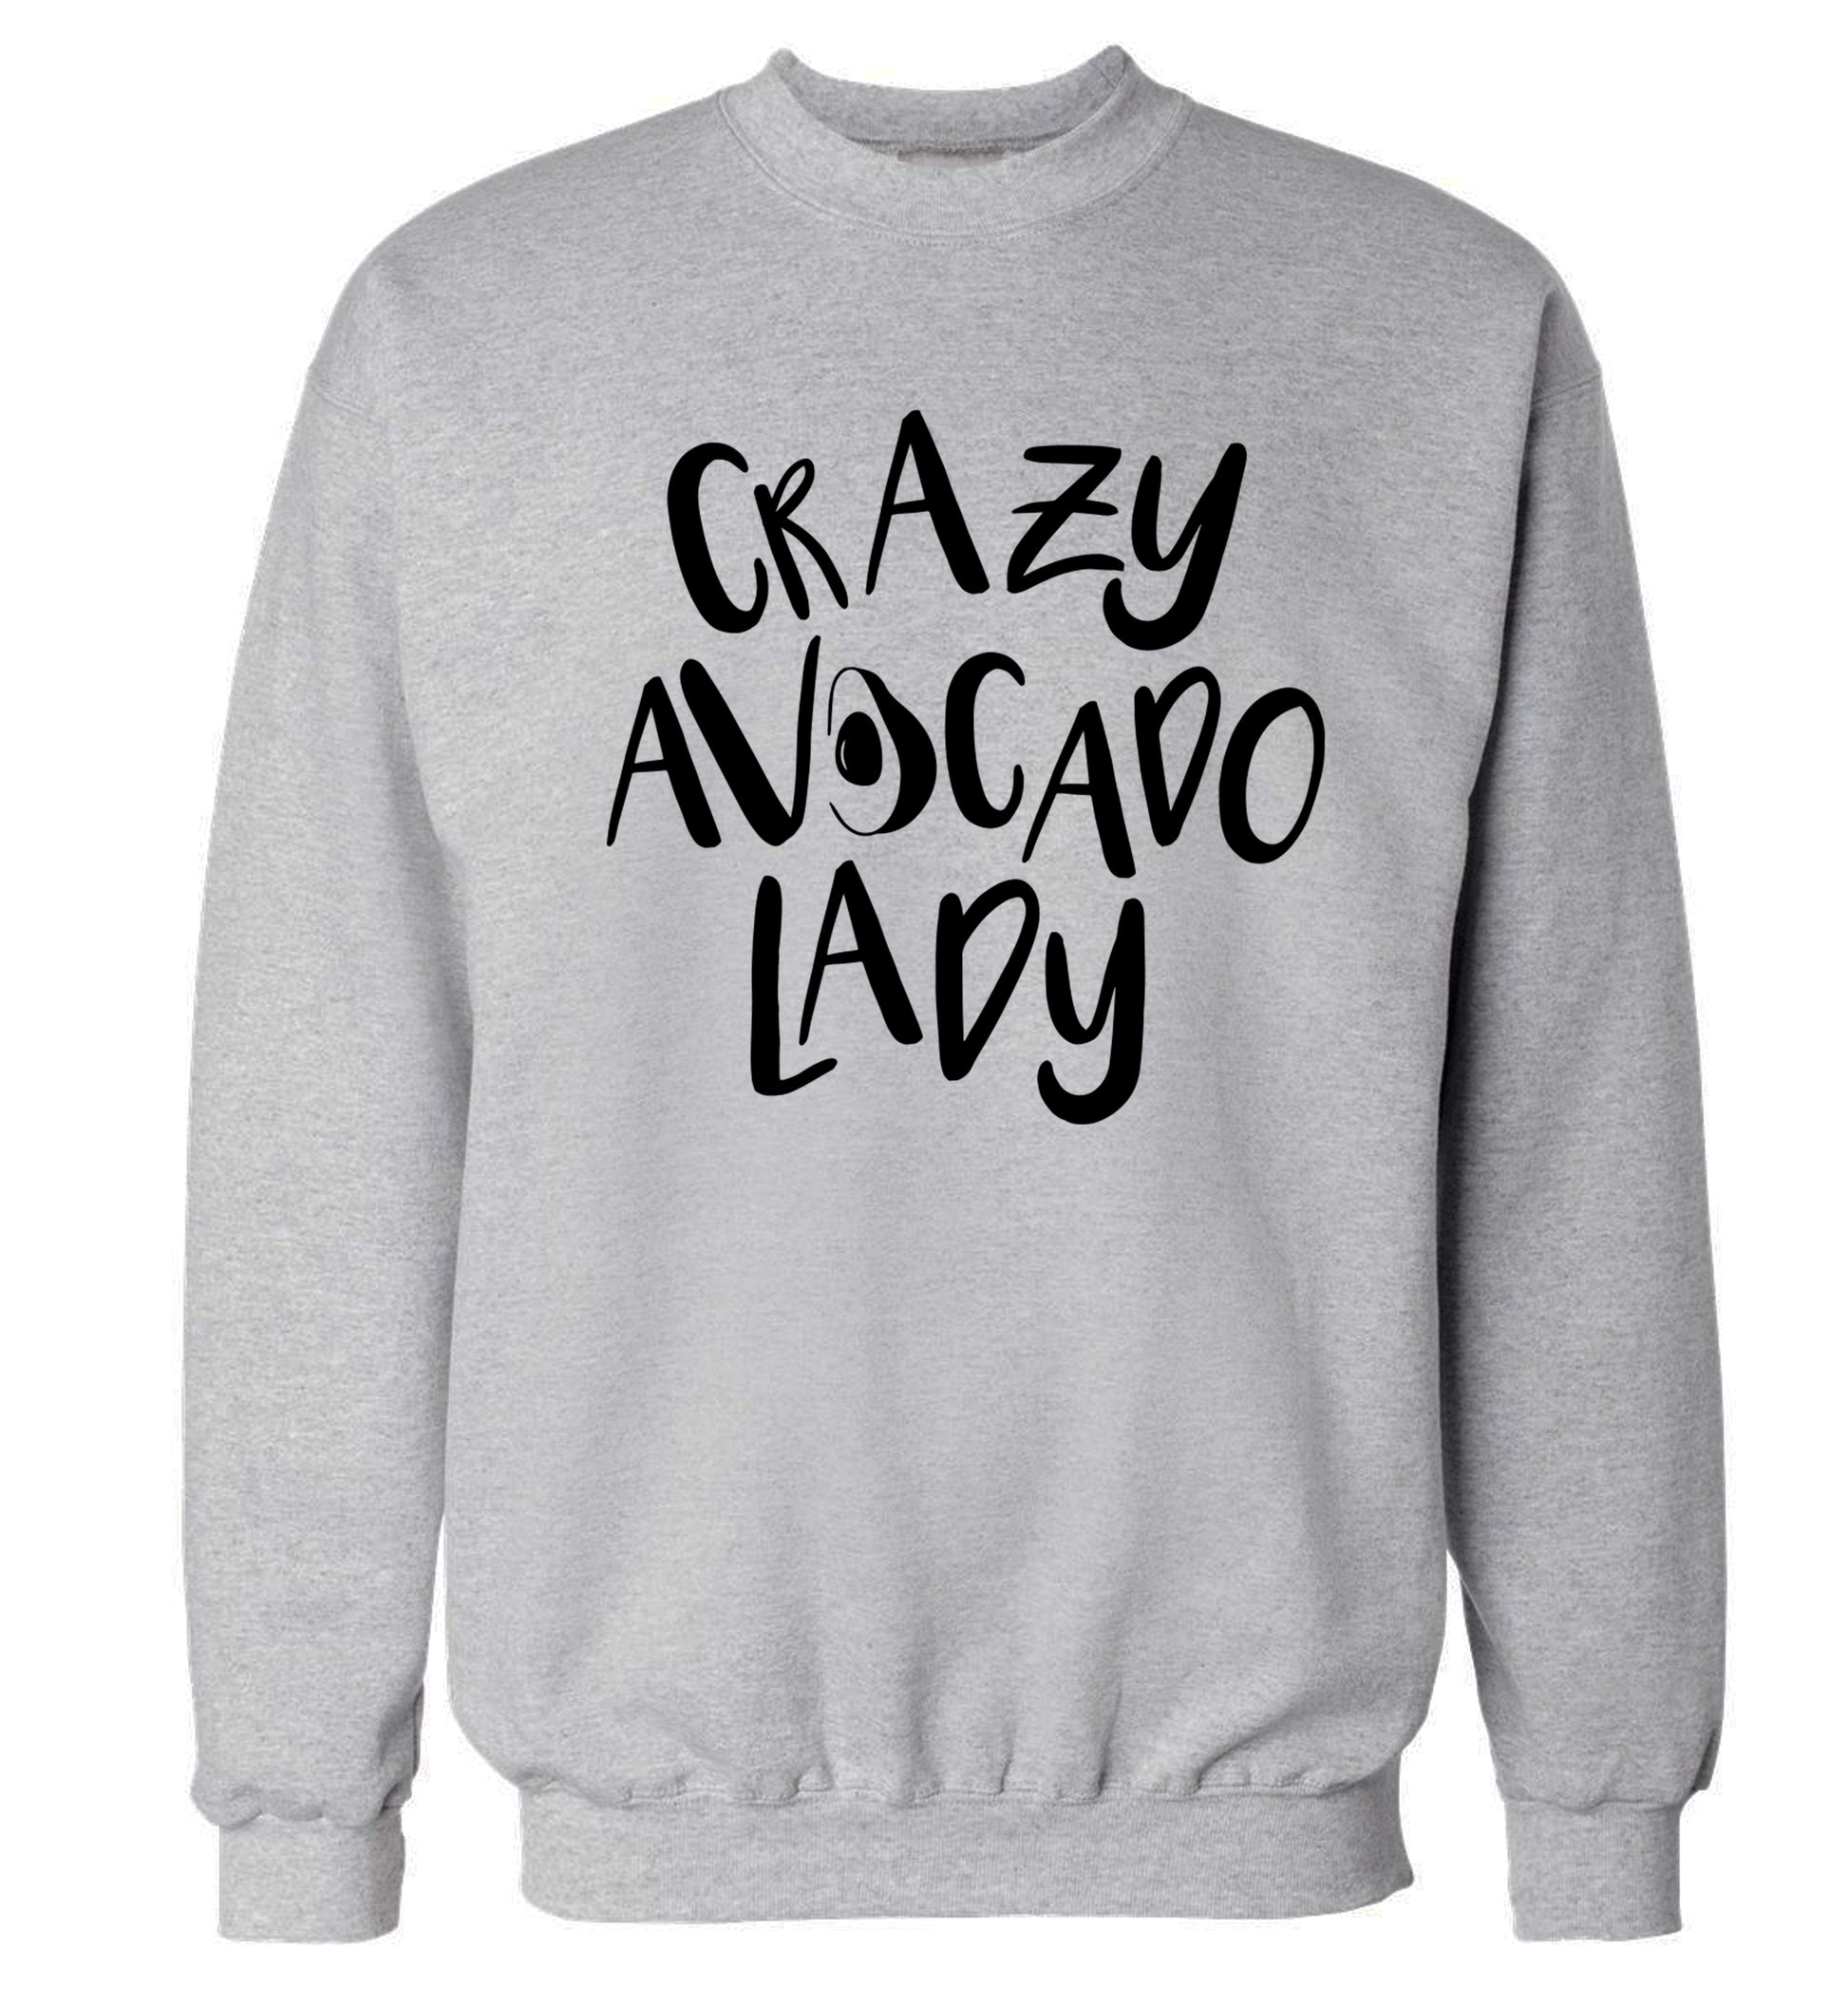 Crazy avocado lady Adult's unisex grey Sweater 2XL